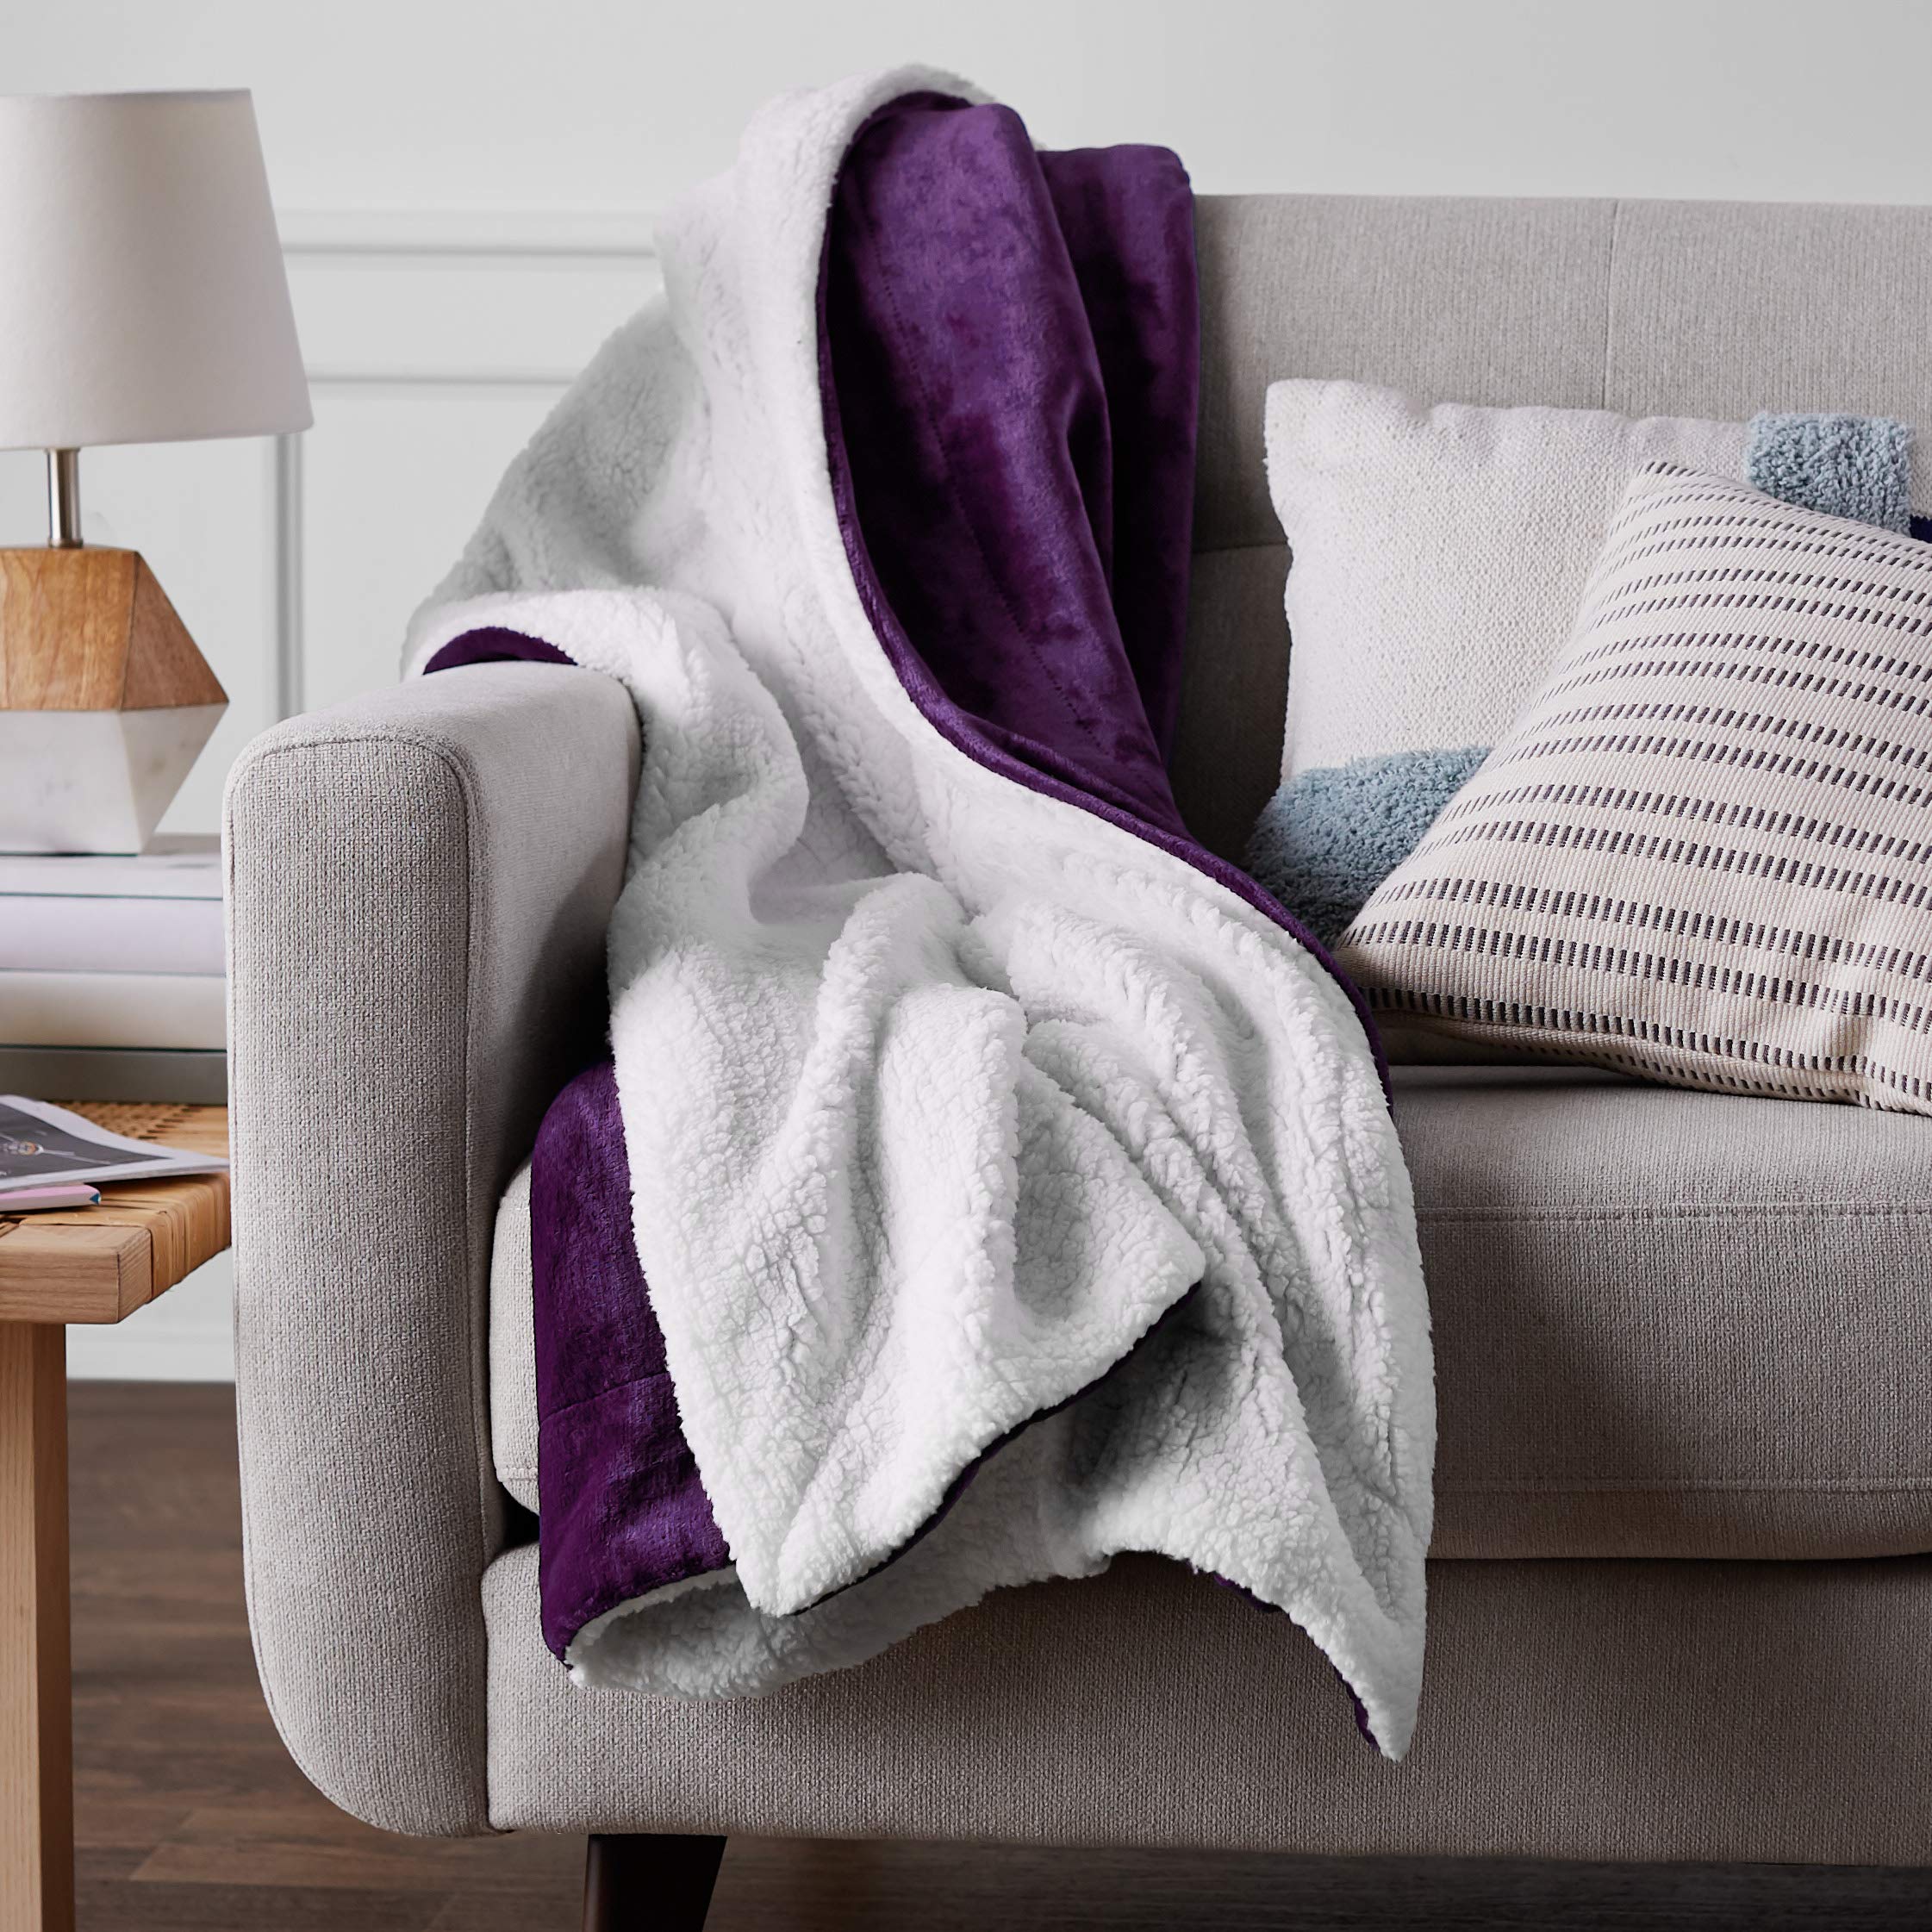 Amazon Basics Ultra-Soft Micromink Sherpa Blanket - Twin, Plum